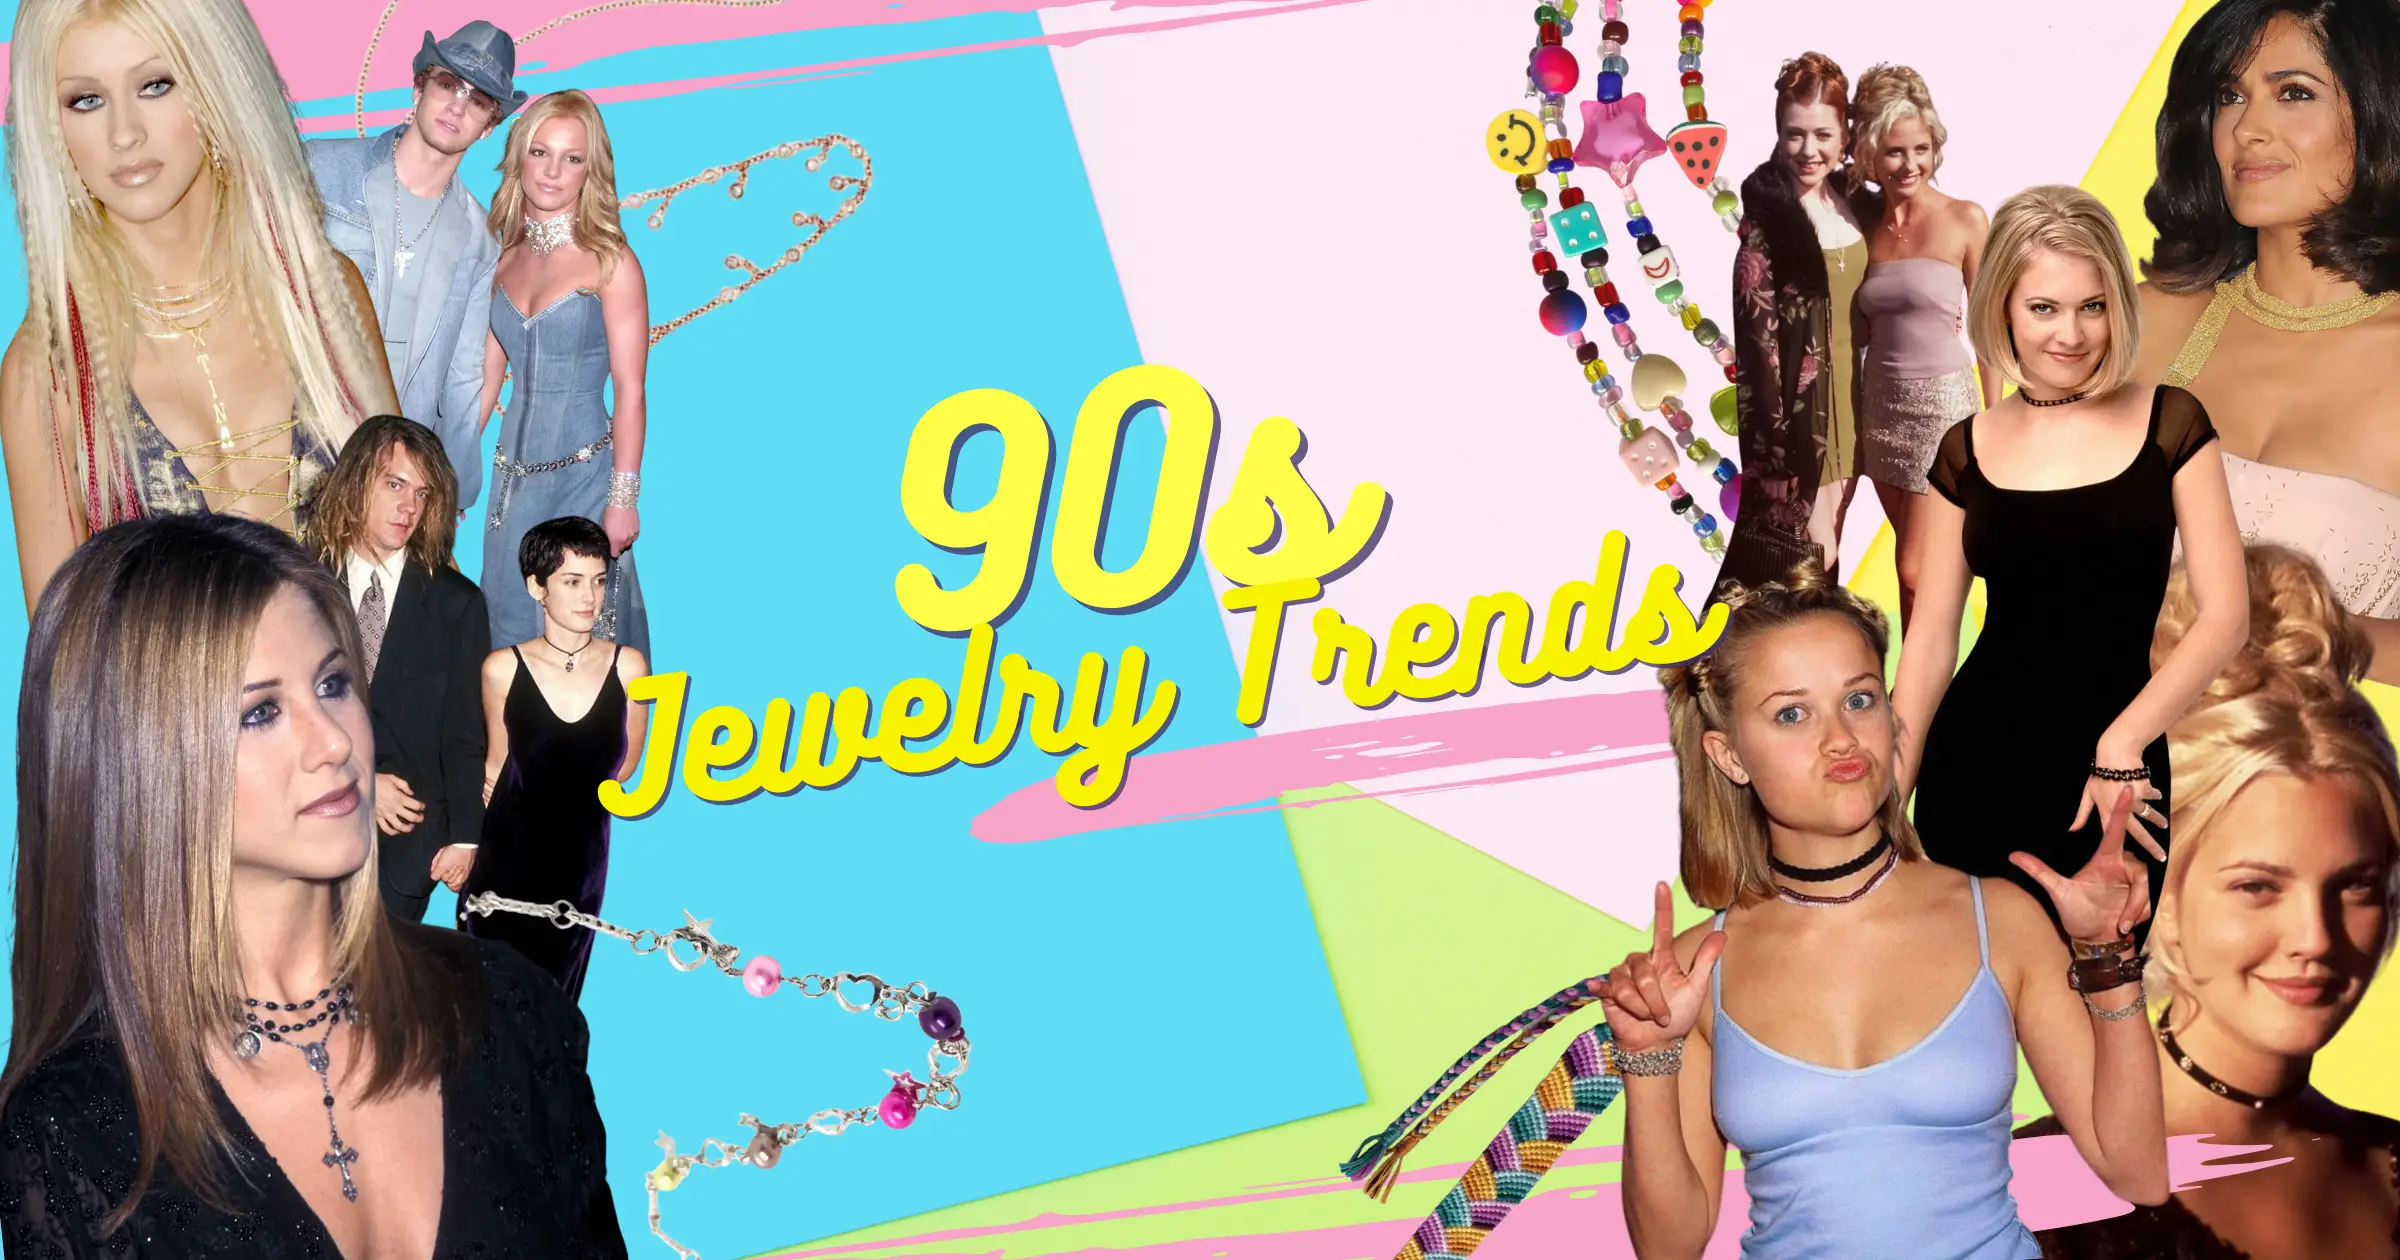 90s Jewelry: Flashy, Fun, and Making a Comeback